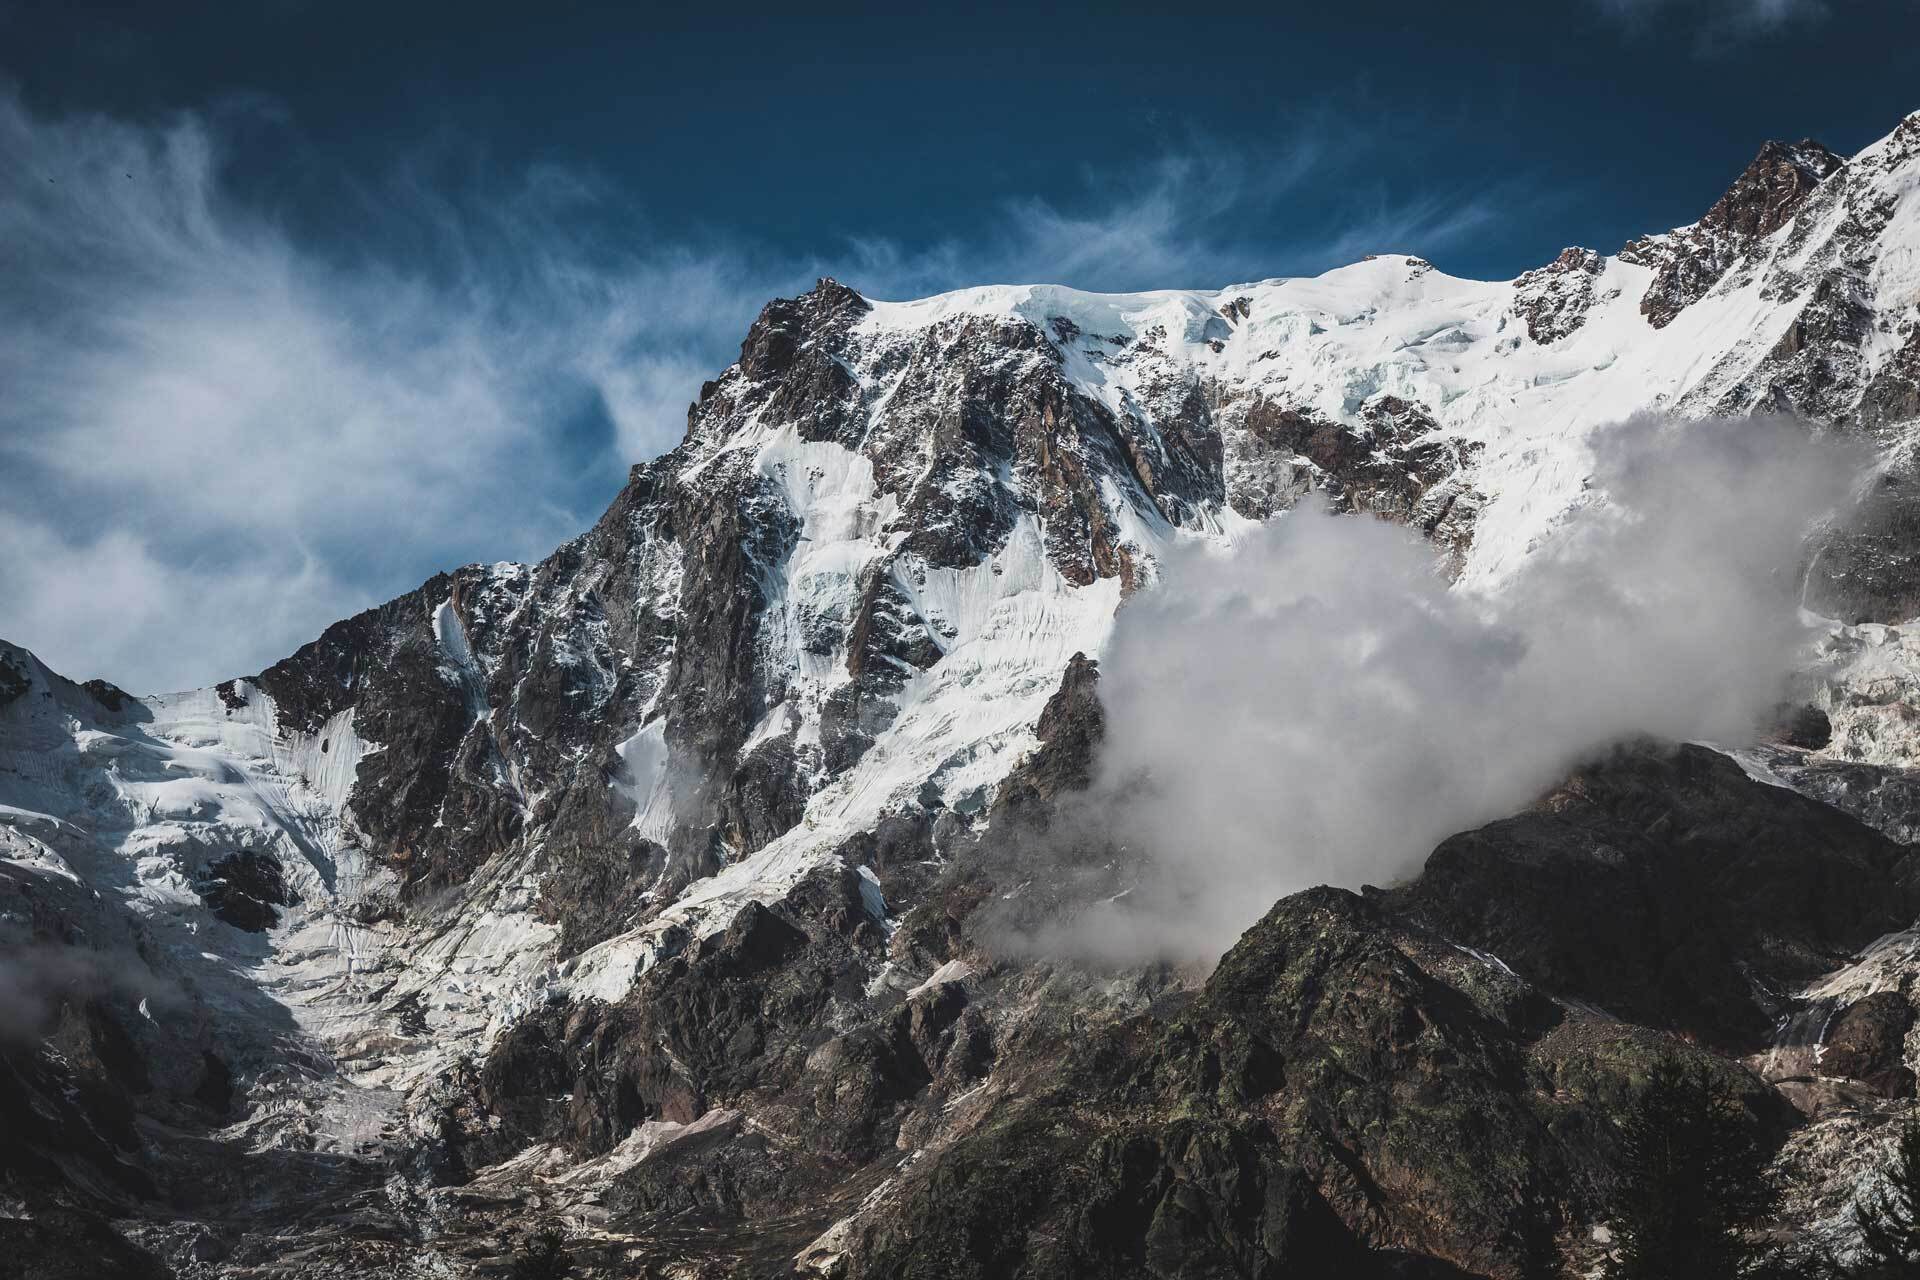 Monte Rosa, the highest mountain in Switzerland